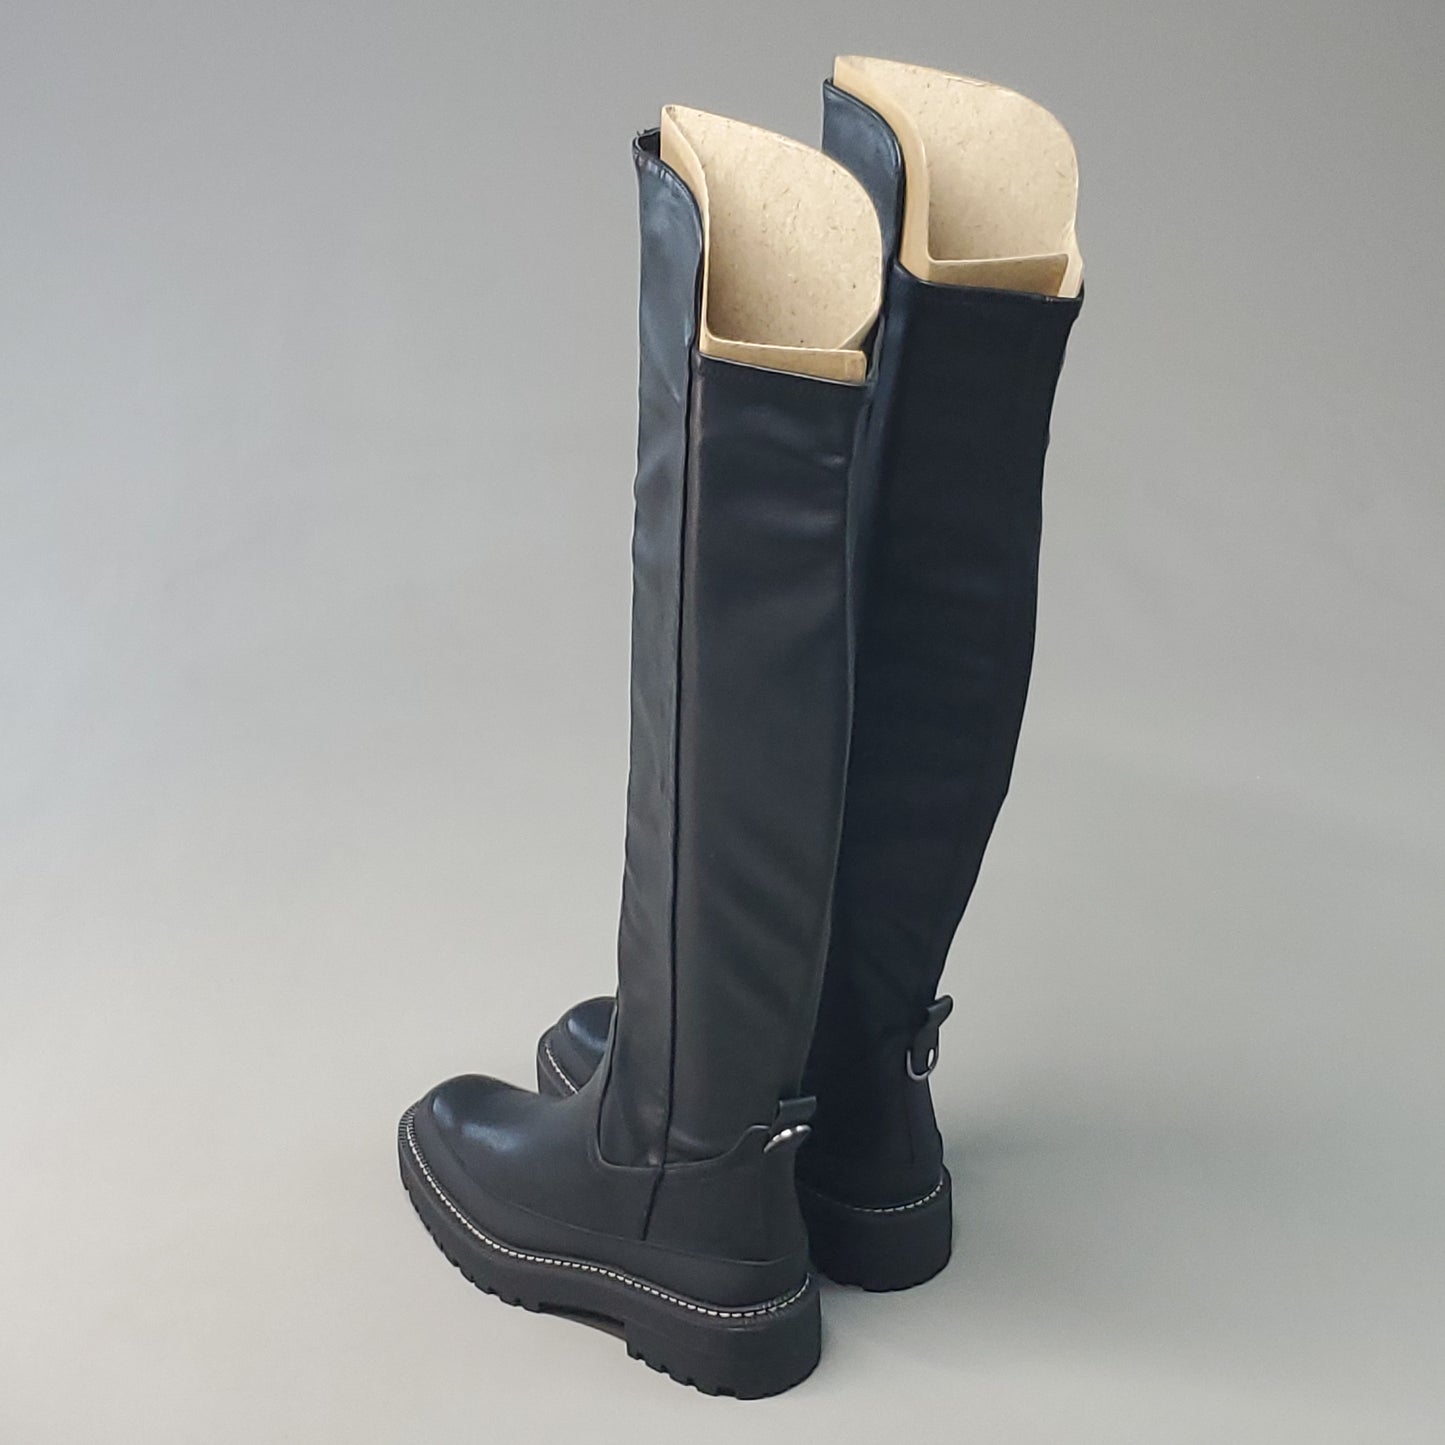 SAM EDELMAN Lerue Nappa Tall Leather Riding Boots Women's Sz 6.5 M Black H8522L1001 (New)